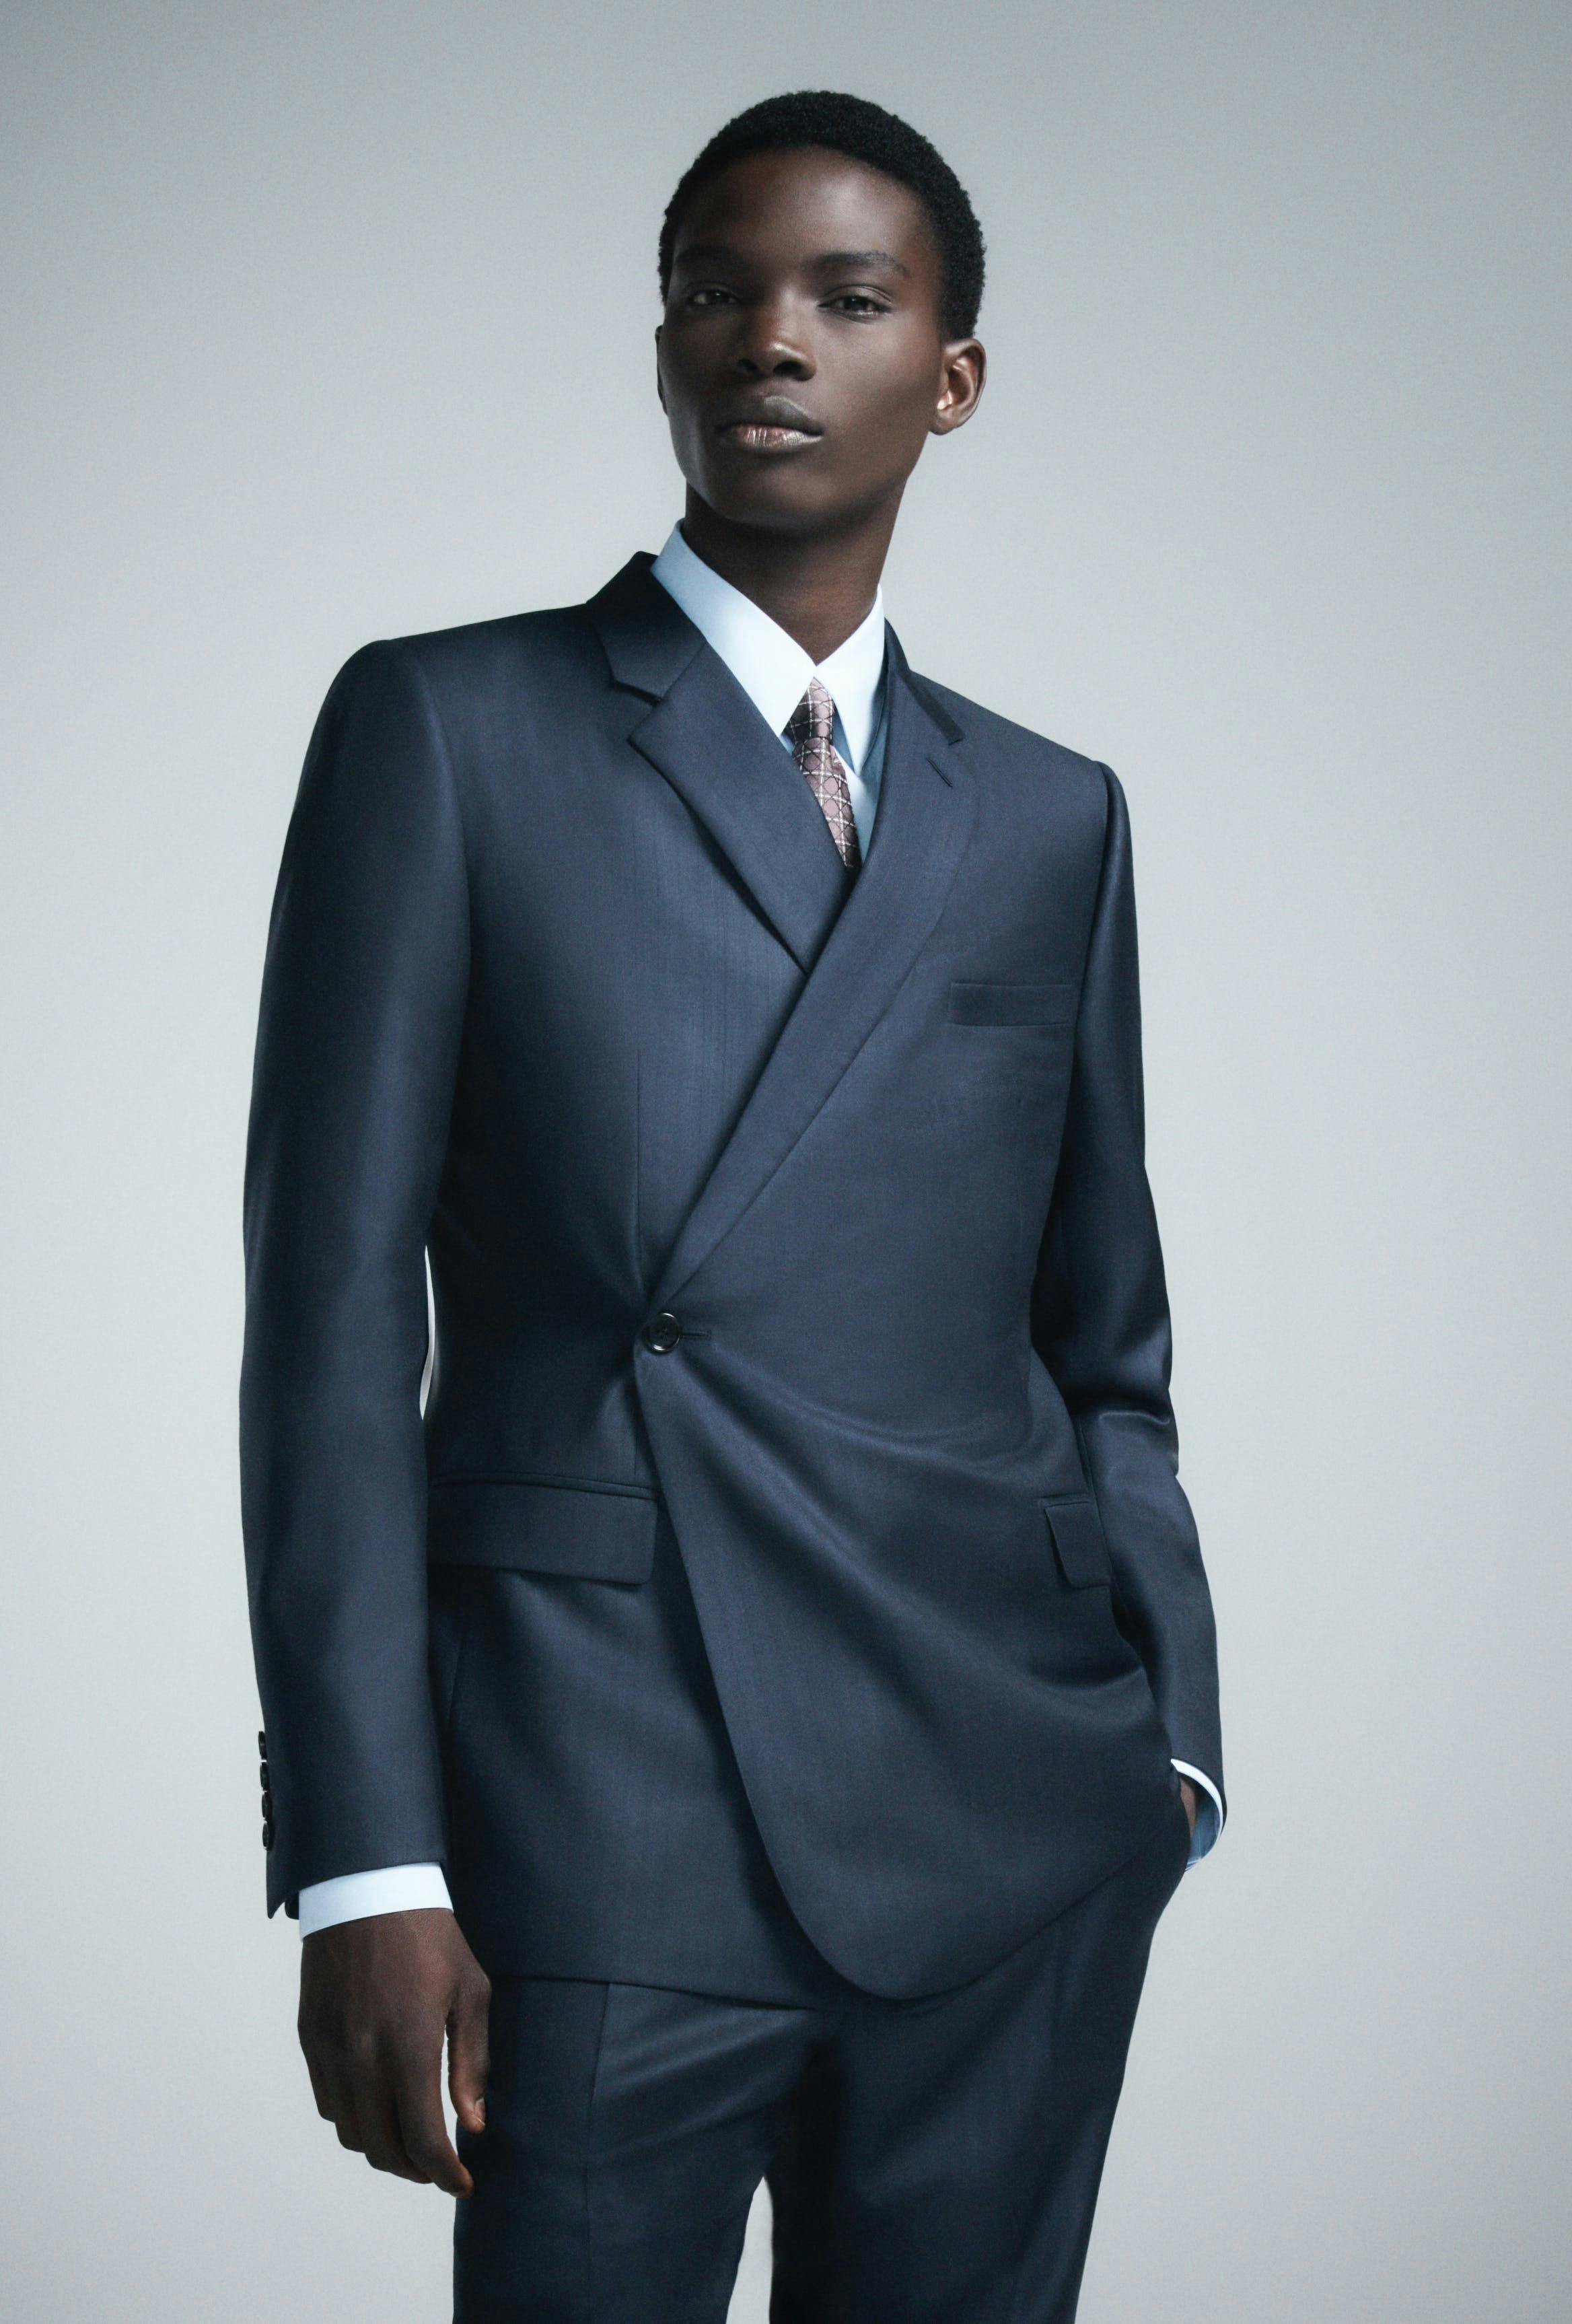 clothing formal wear suit tuxedo coat jacket blazer tie face person